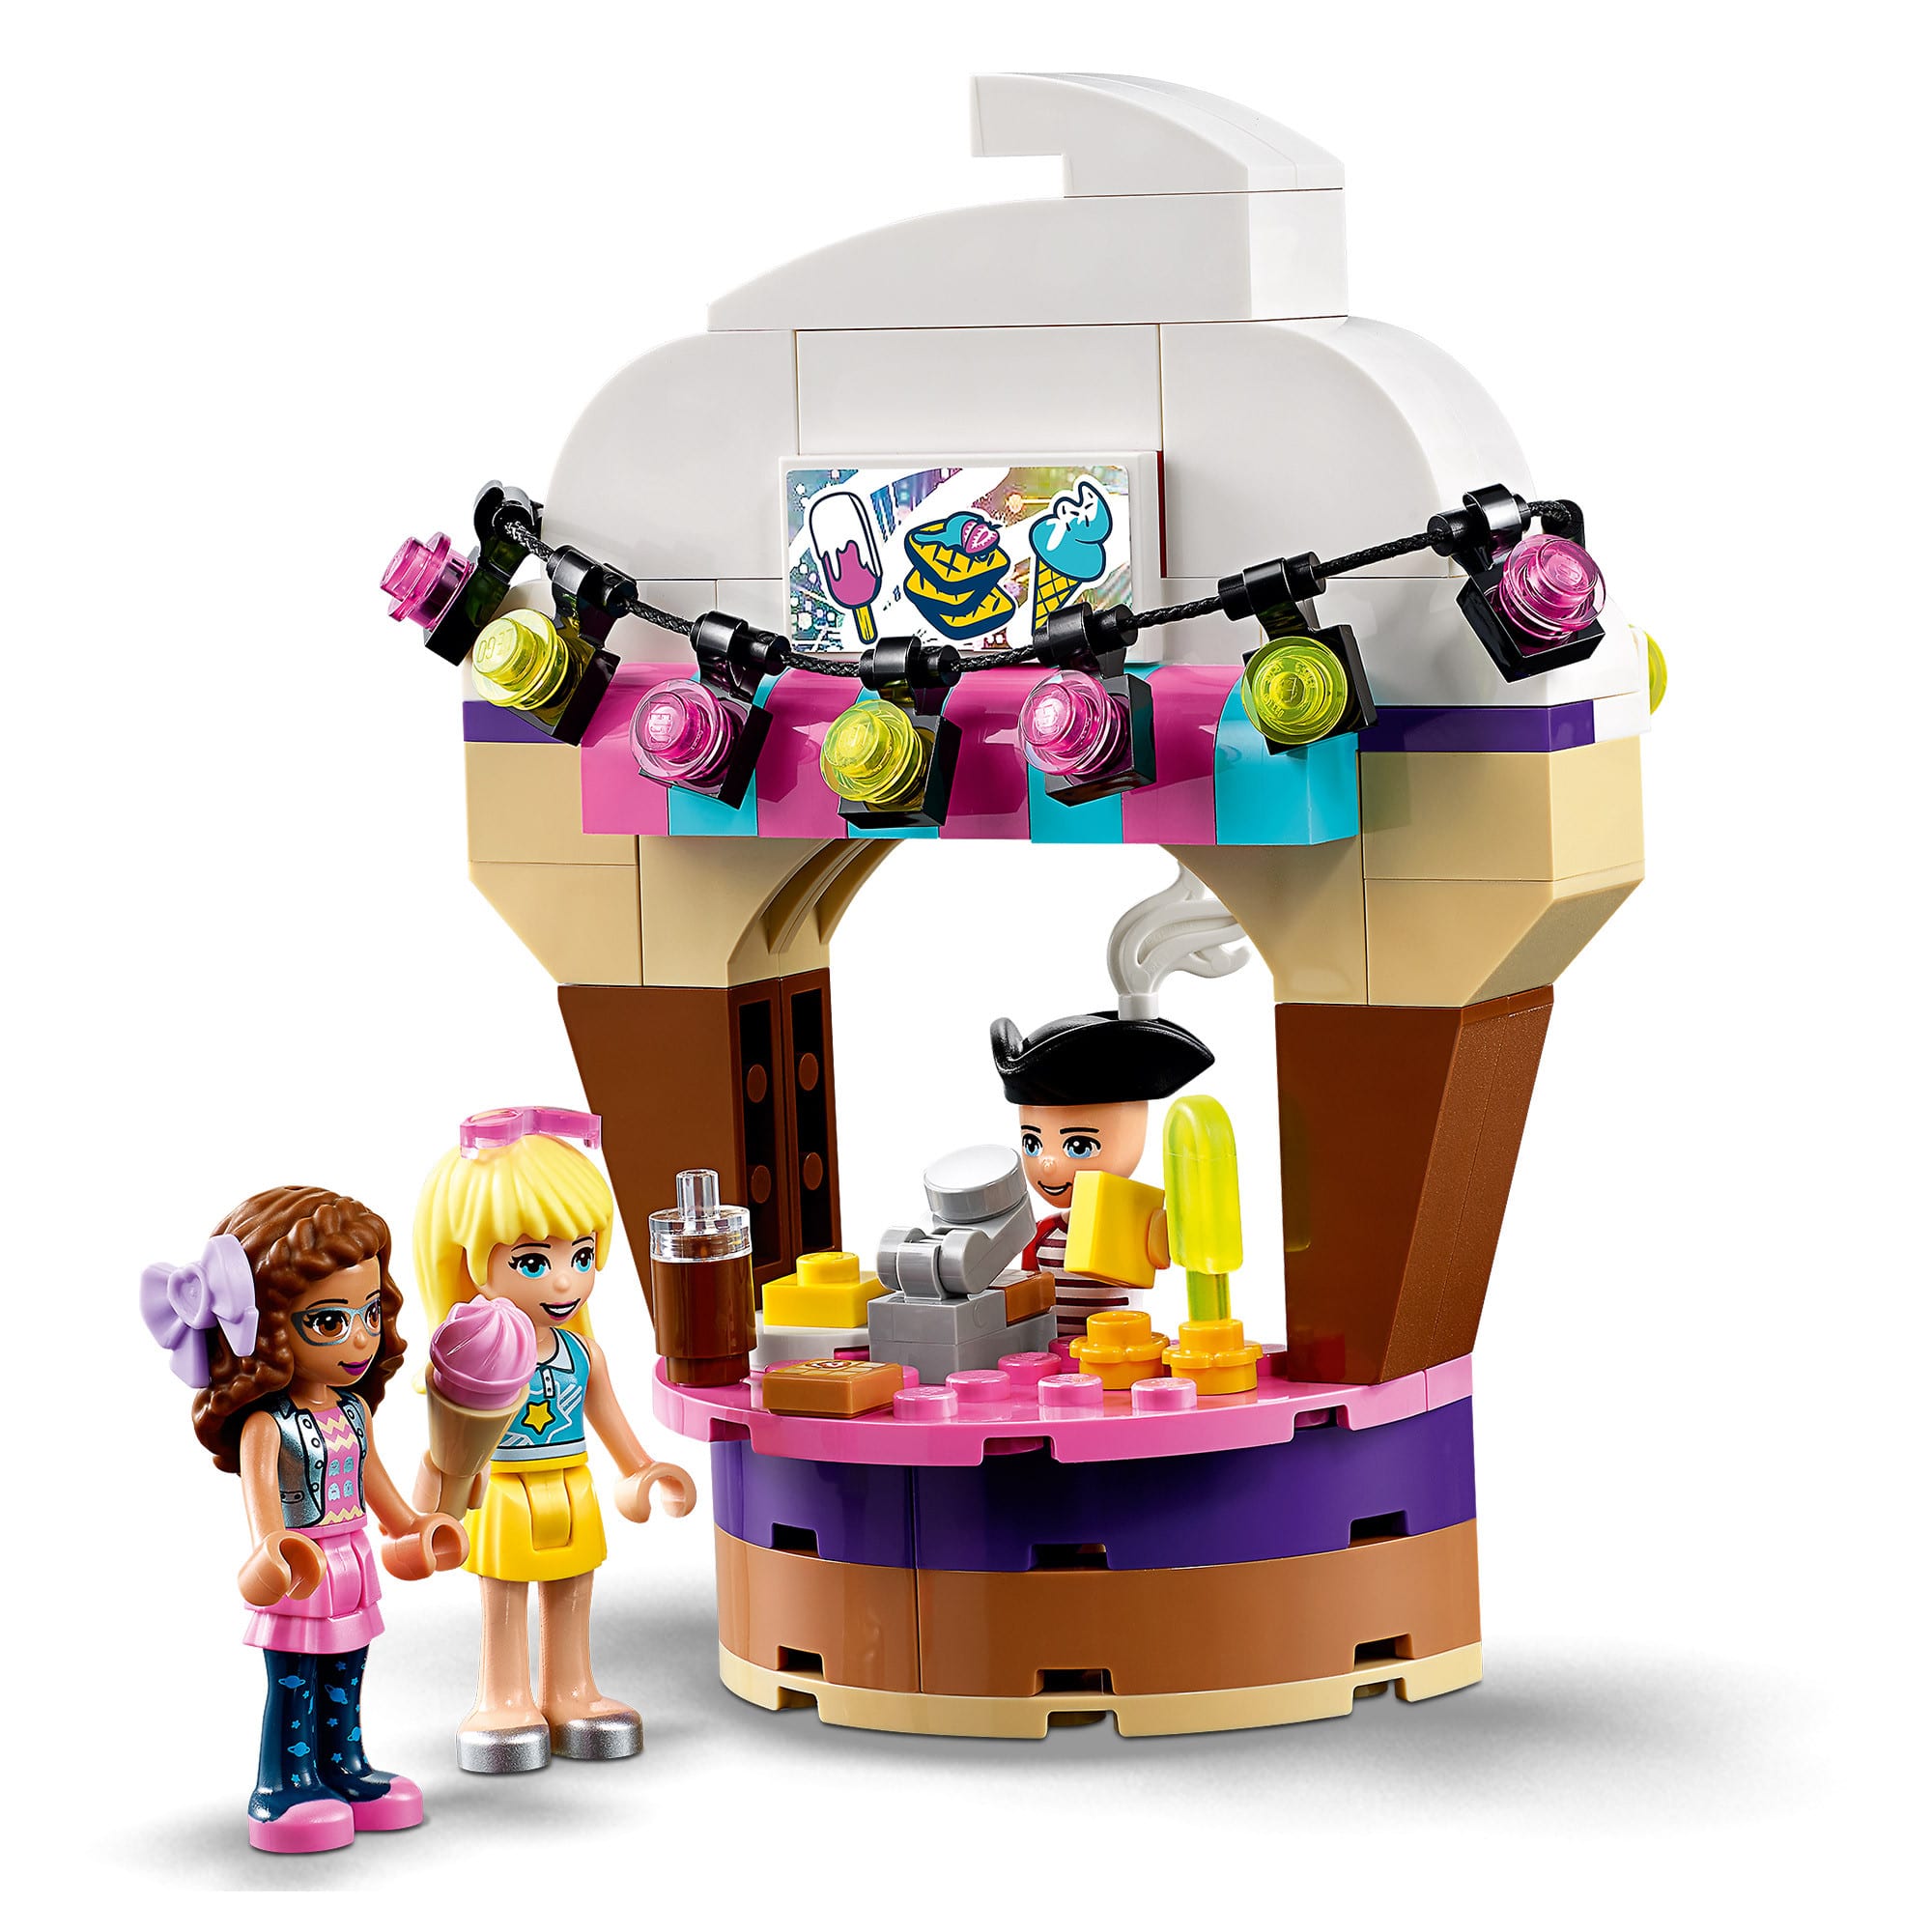 LEGO Friends 41375 - Heartlake City Amusement Pier